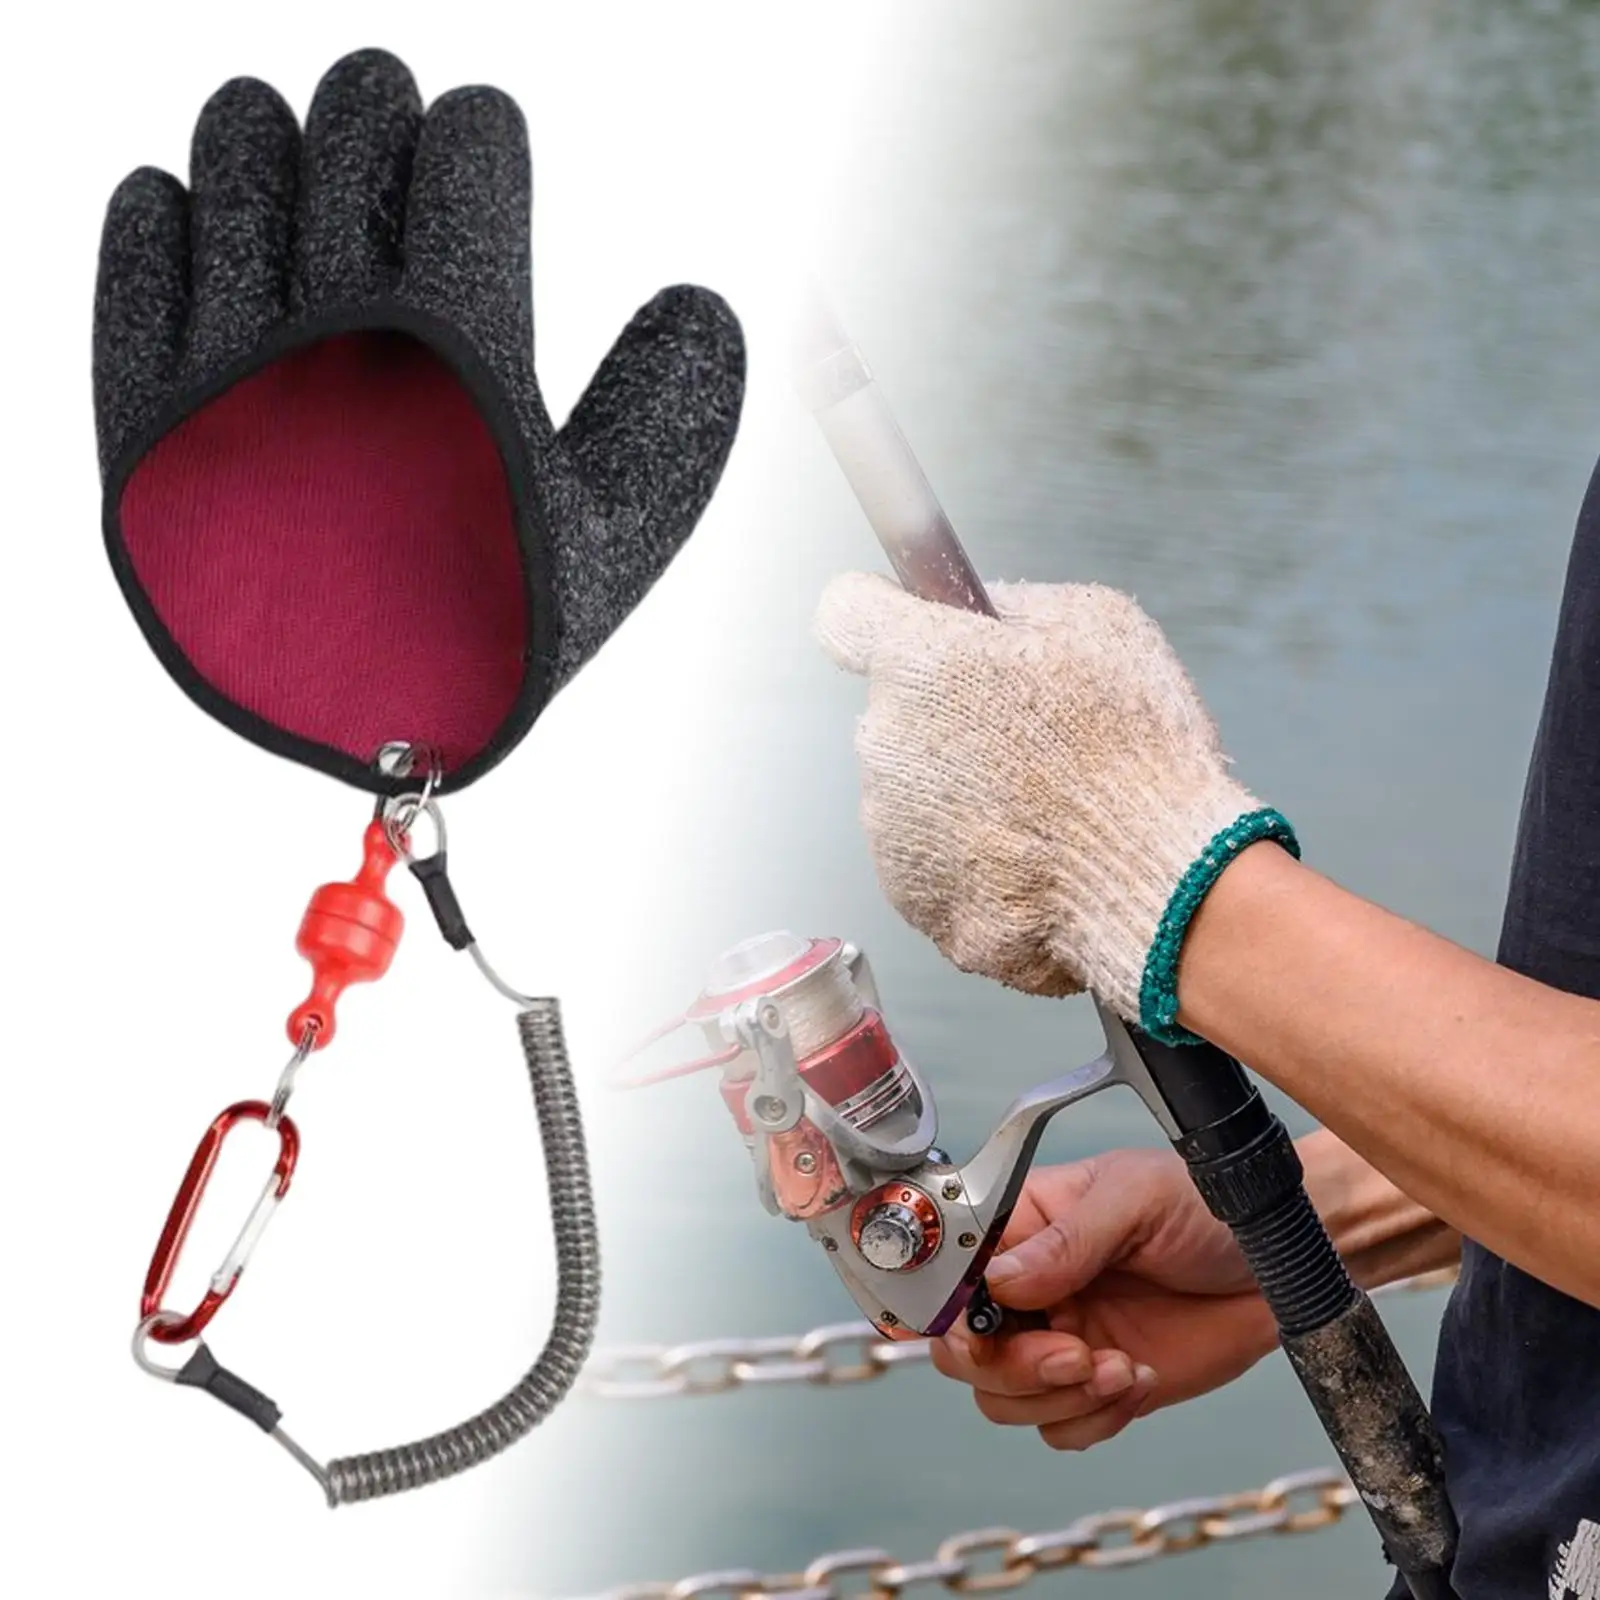 Fishing Gloves Nonslip Puncture Proof Water Resistant Hunting Gloves Fish Glove Cut Resistant for Handling Women Men Fisherman